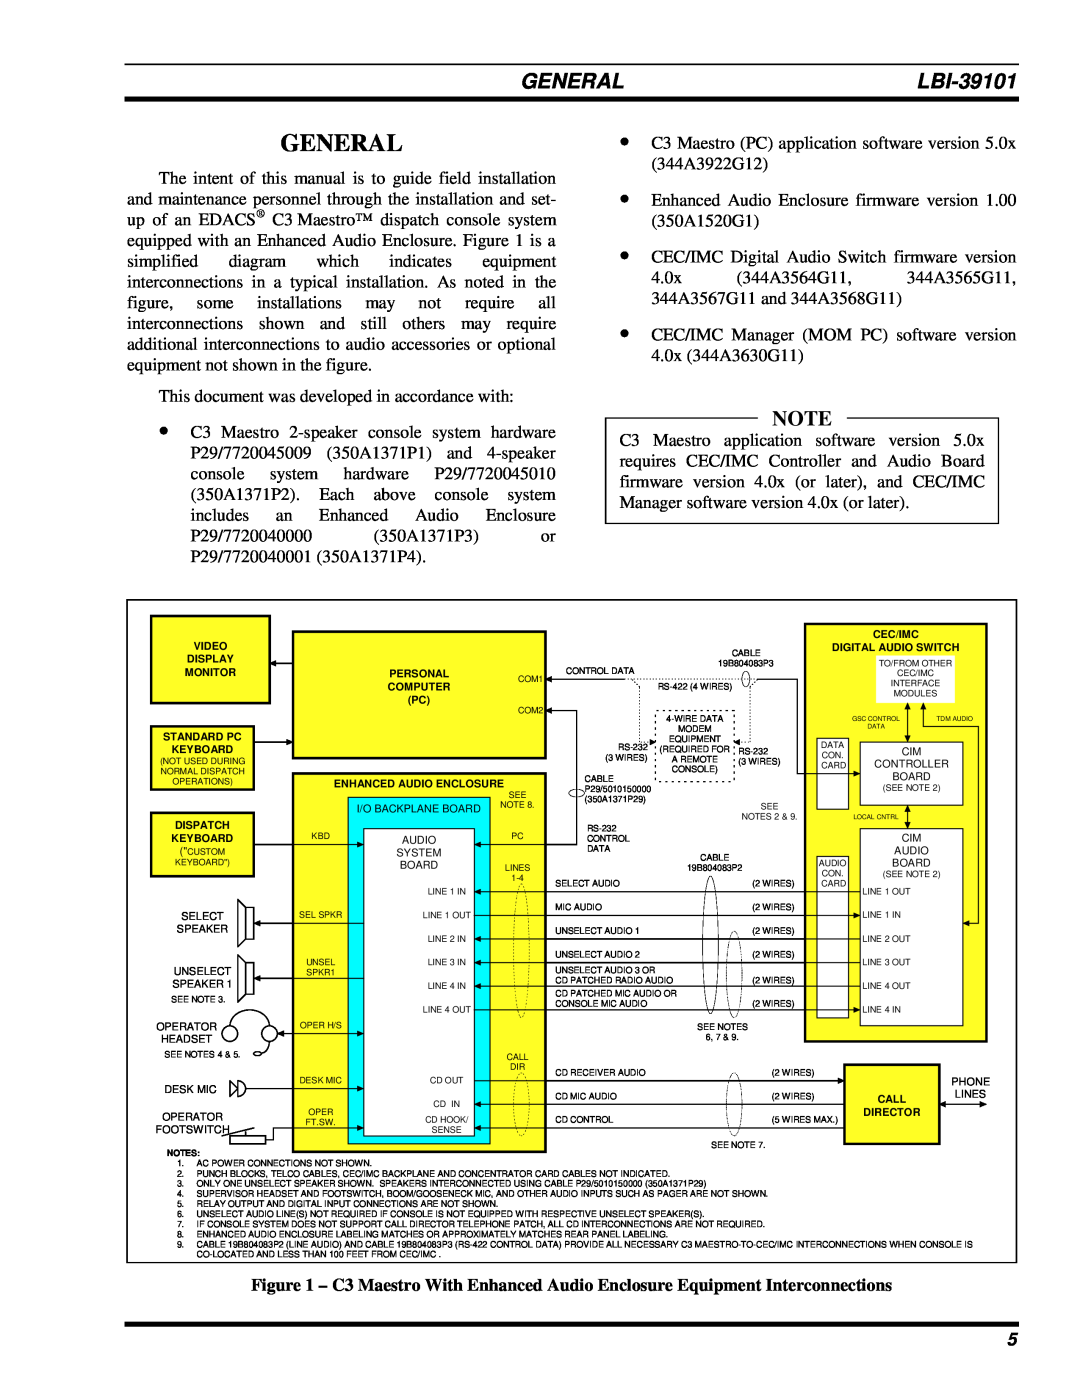 Ericsson LBI-39101A manual General 